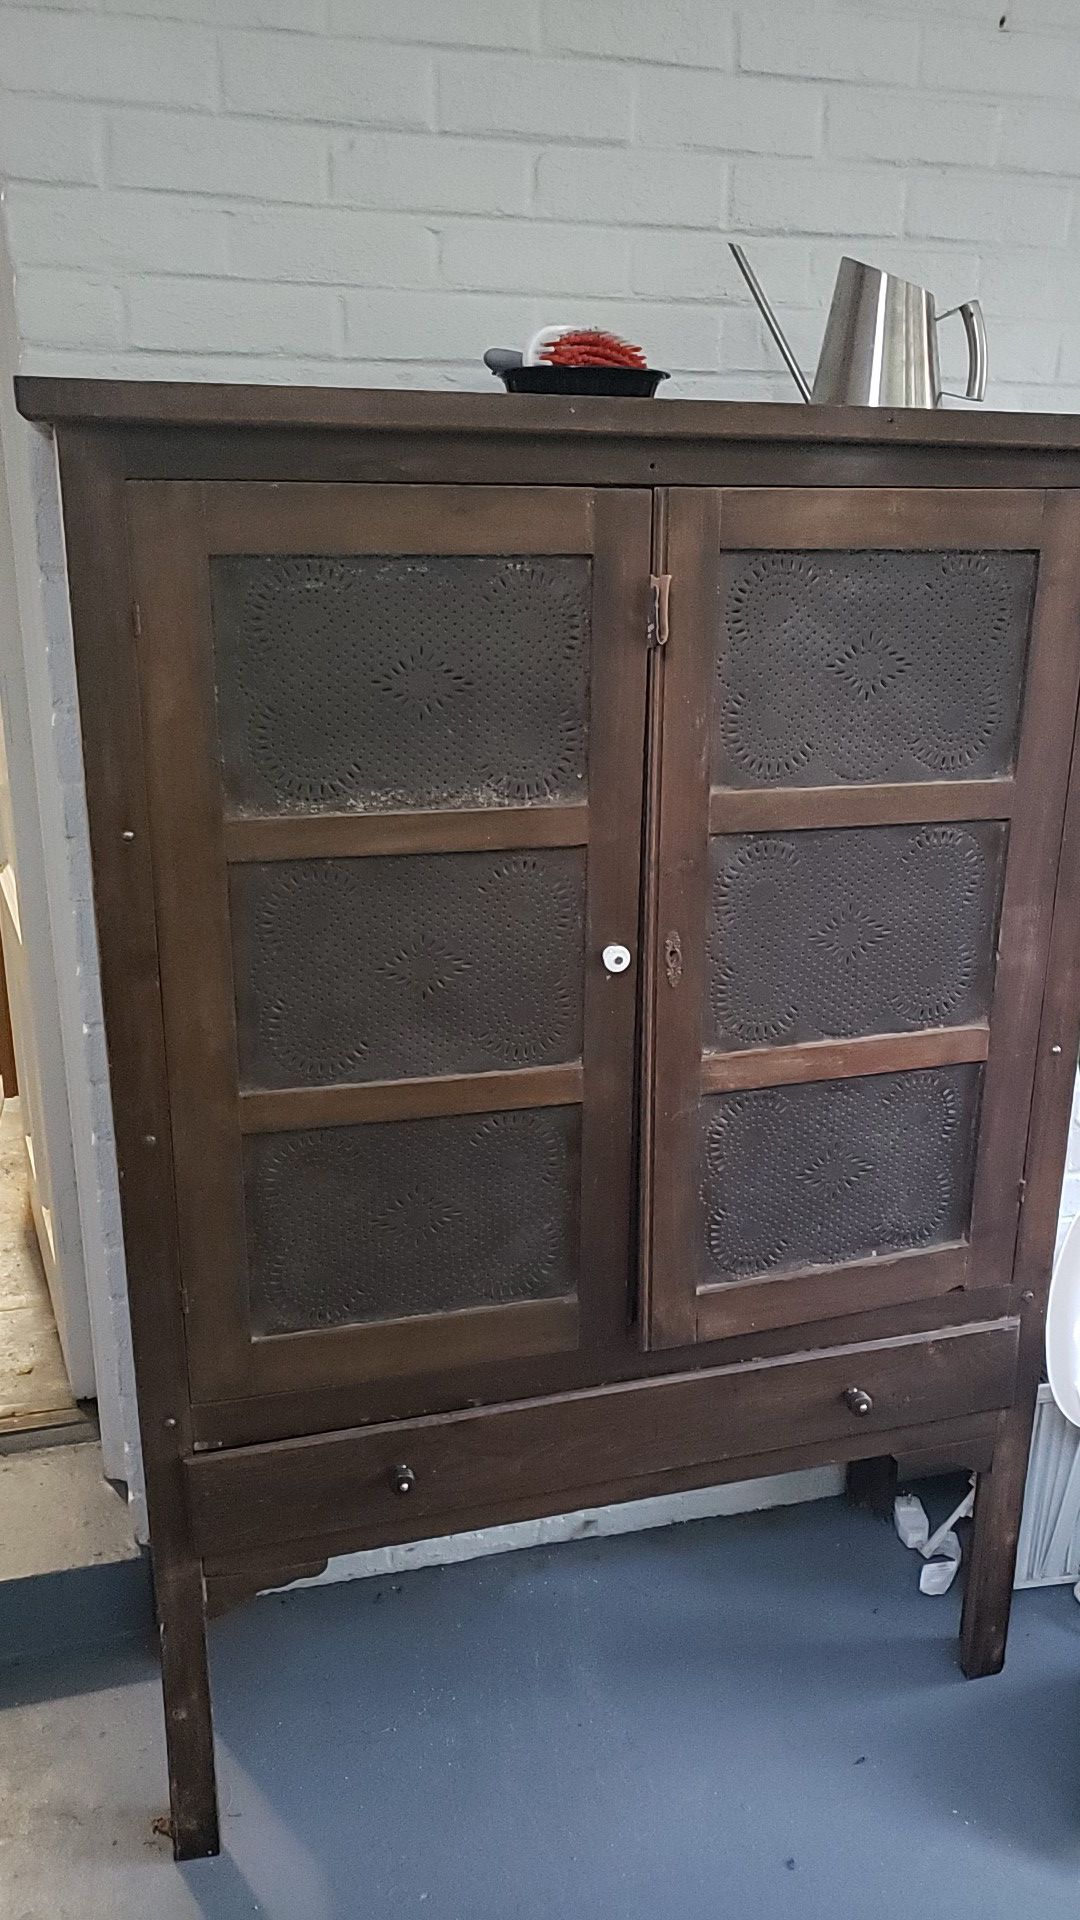 Antique Pie safe - cabinet